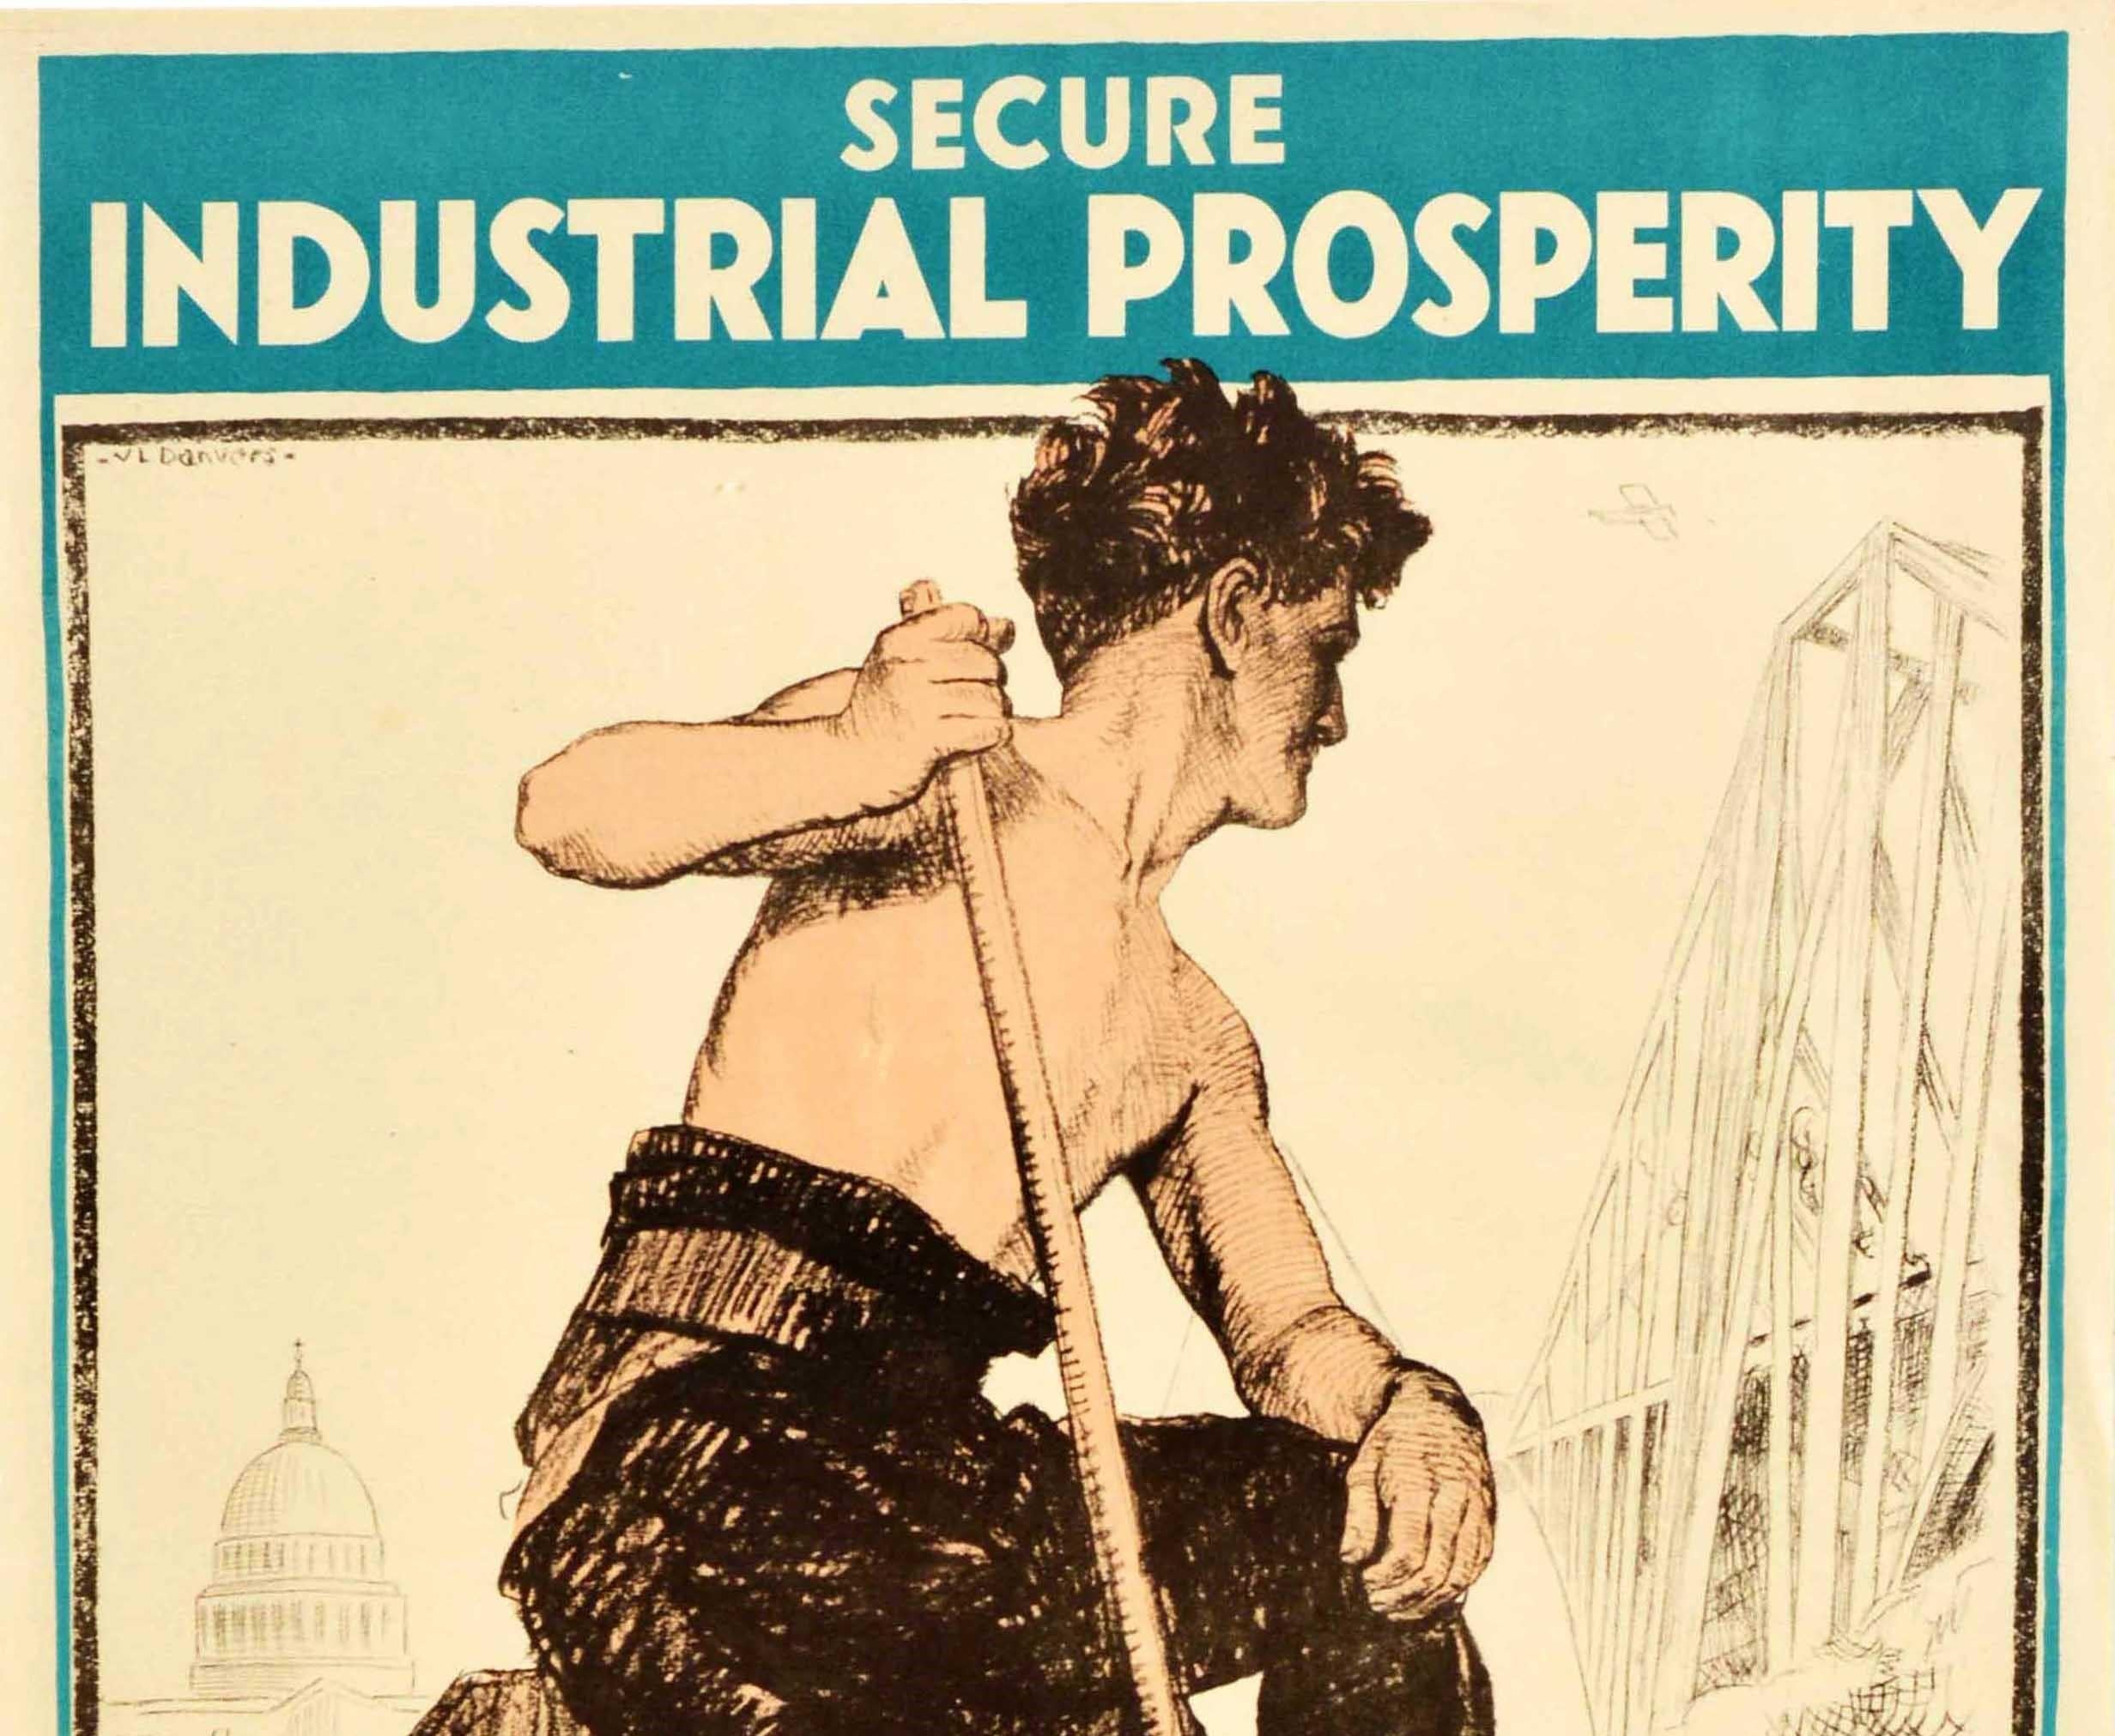 Original Vintage Poster Secure Industrial Prosperity Vote Labour Party Elections - Print by Verney L. Danvers